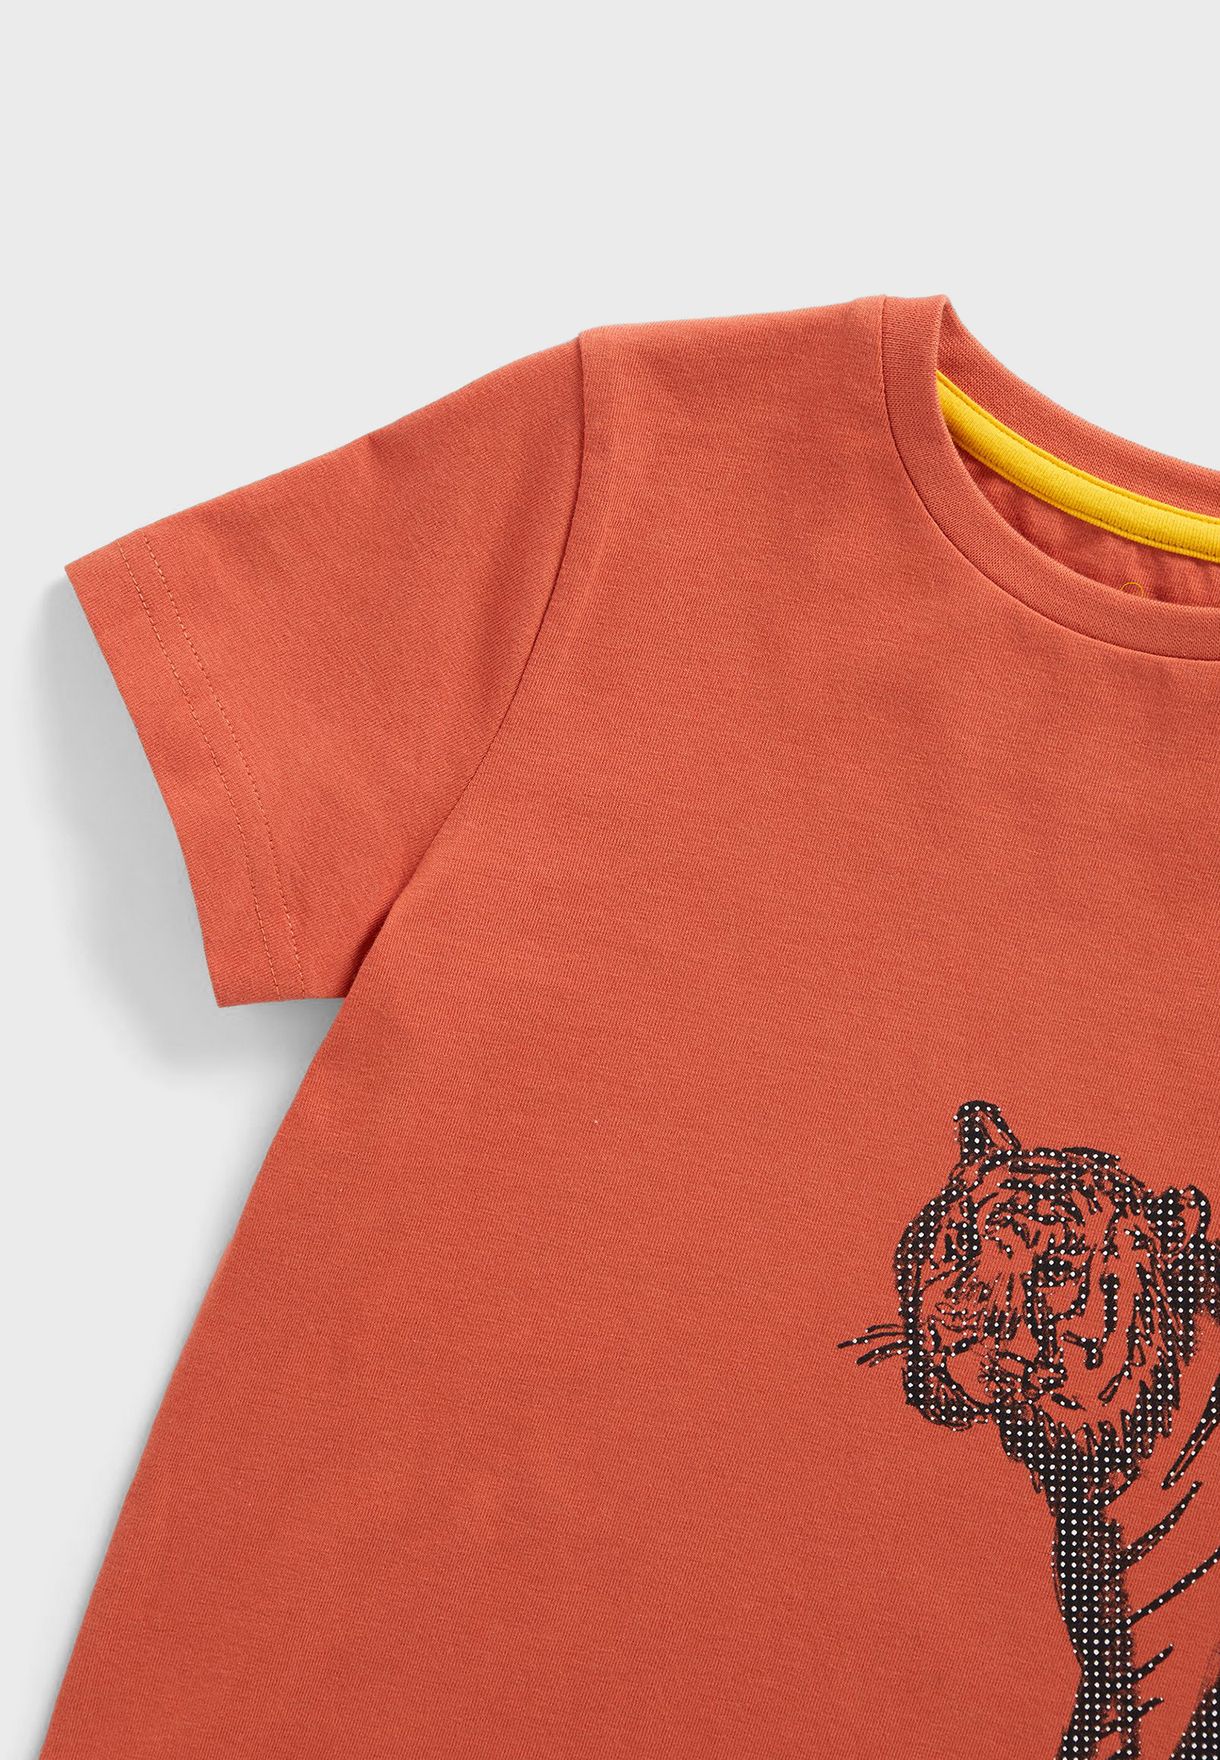 Kids Tiger Print T-Shirt